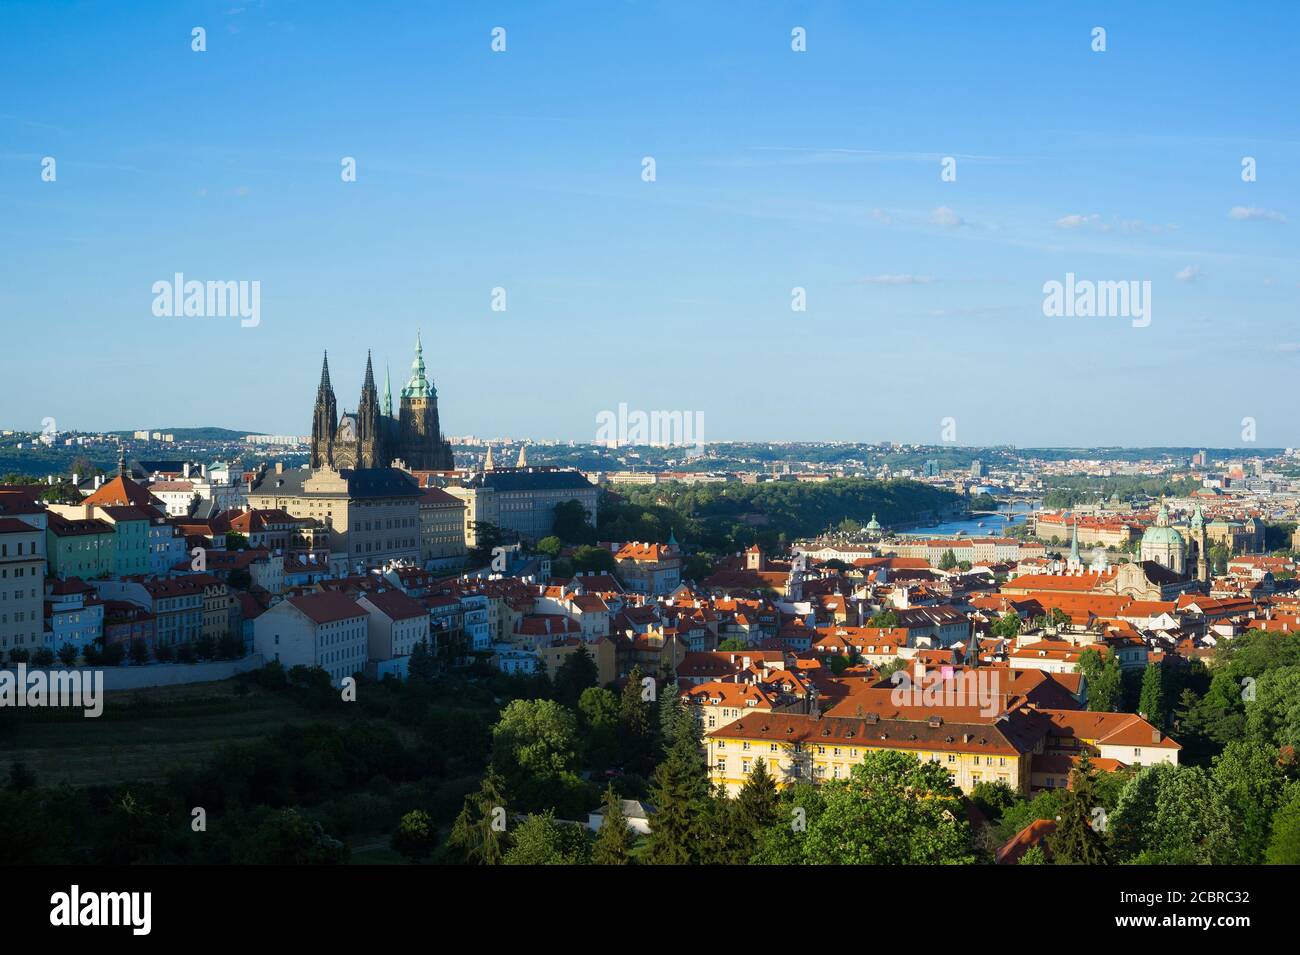 Hradcany and Lesser Town area ( Mala strana ), Prague, Czech Republic / Czechia - cityscape of capital city. Old historical houses and towers of Pragu Stock Photo